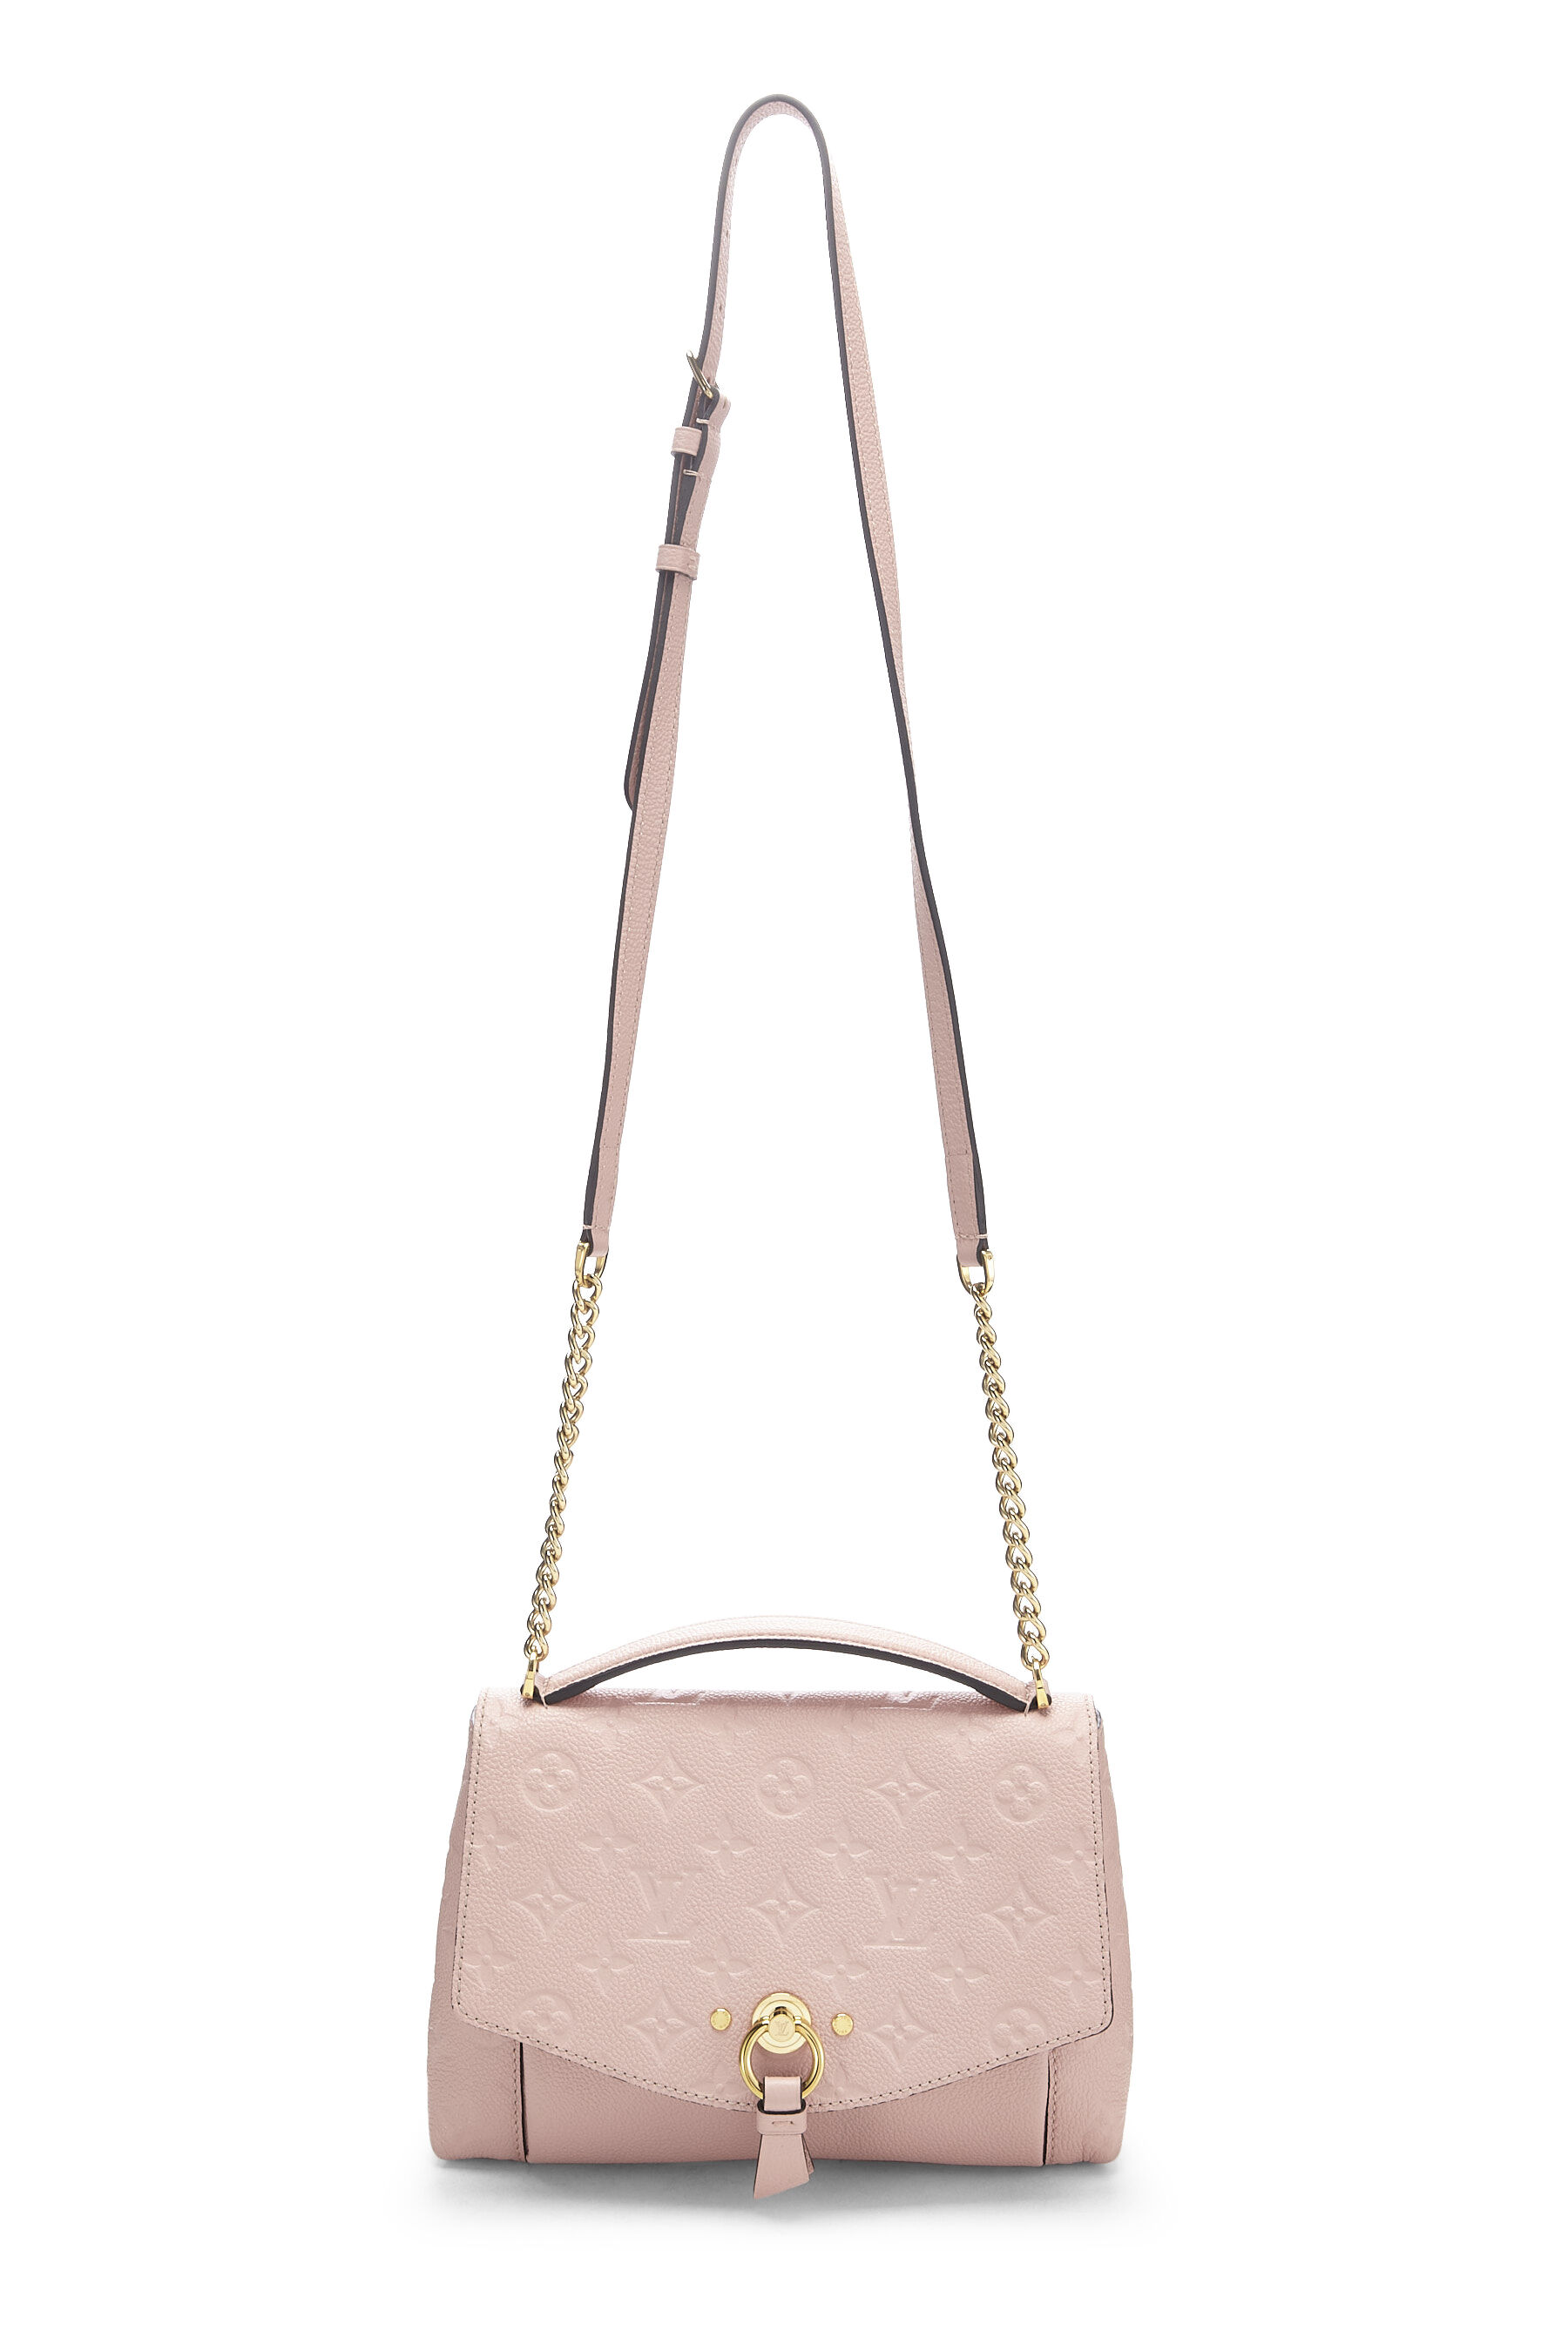 Louis Vuitton Blanche Leather Handbag